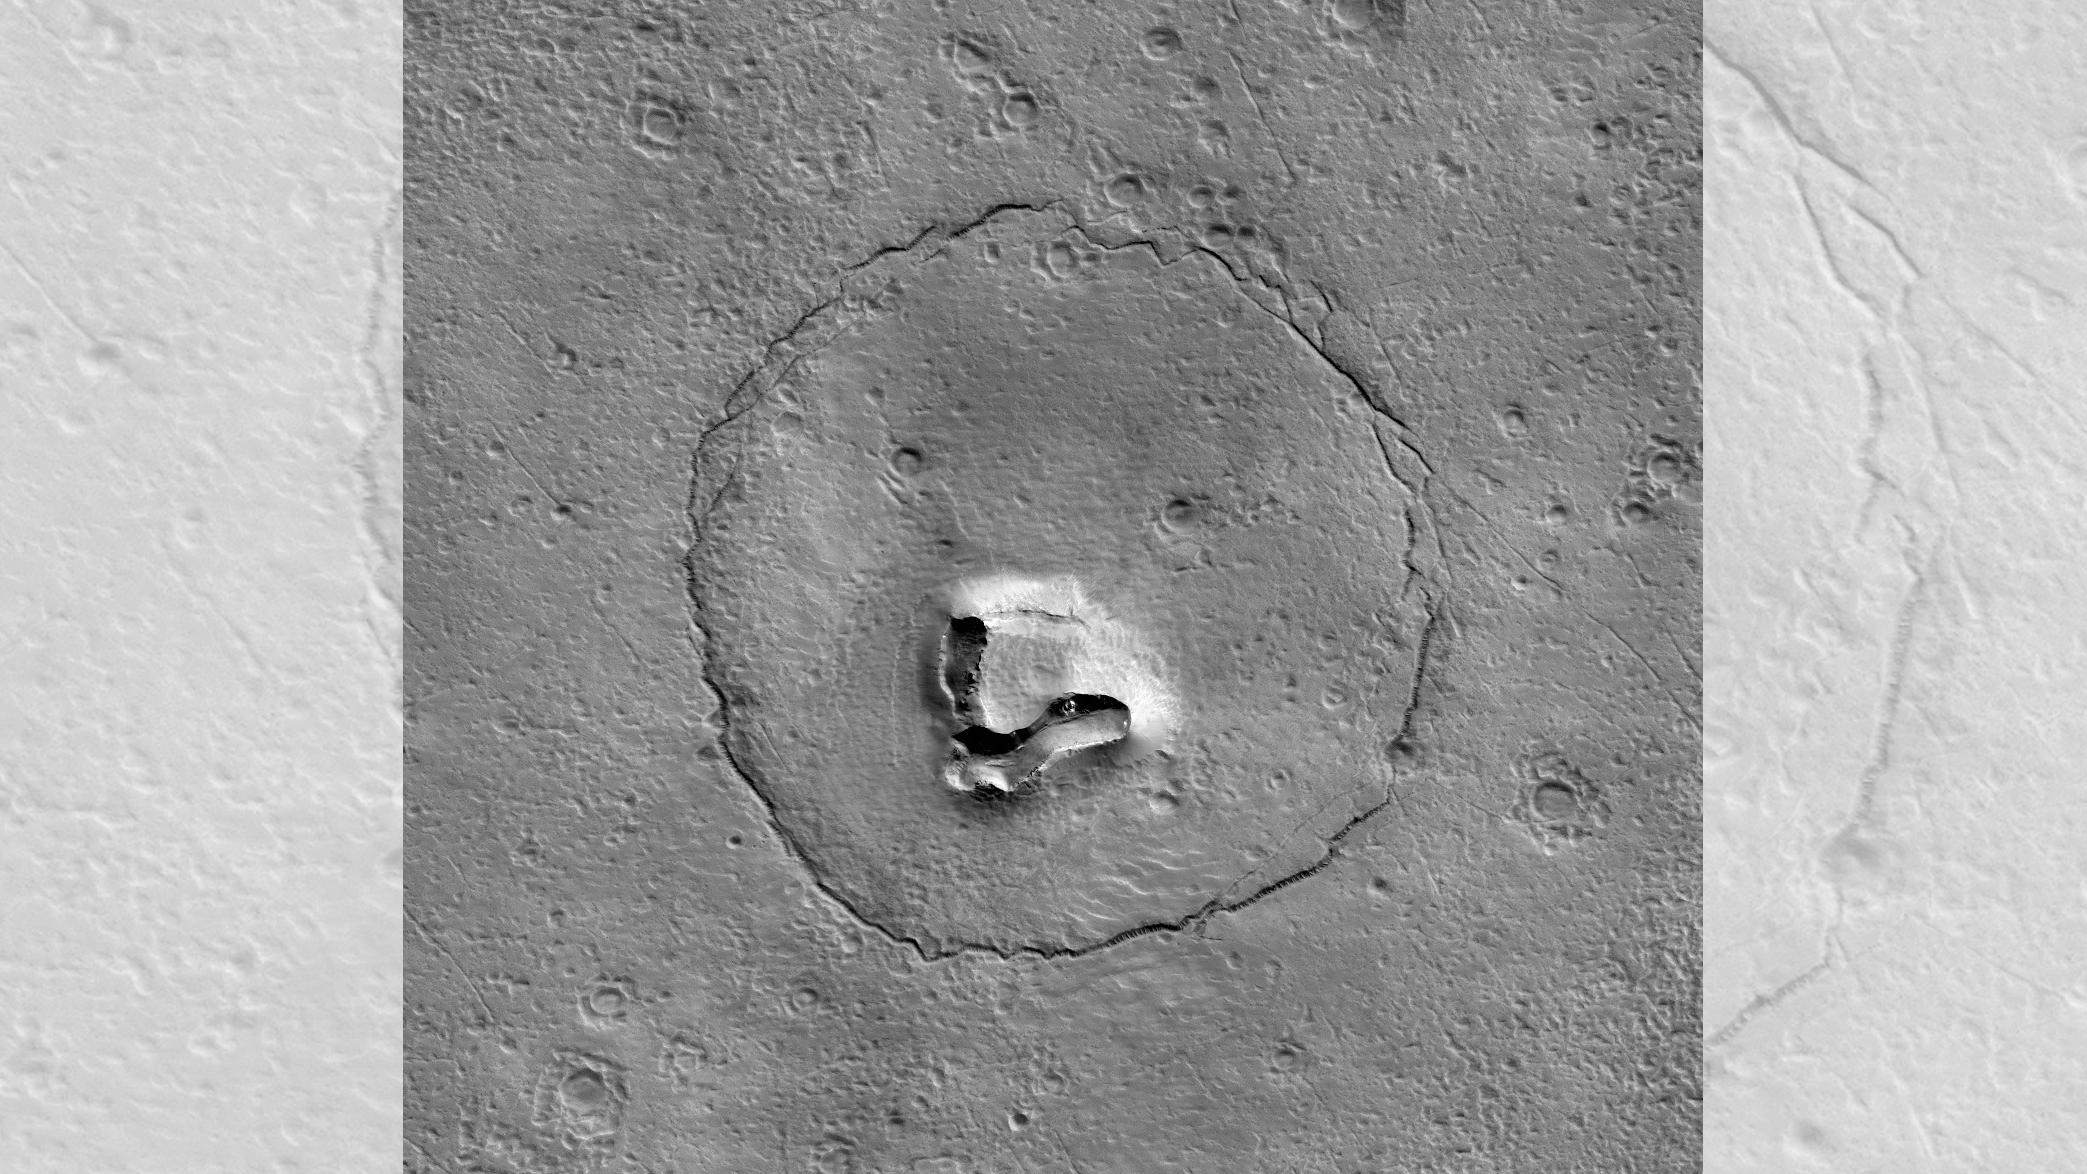 Martian rocks that look just like a teddy bear?